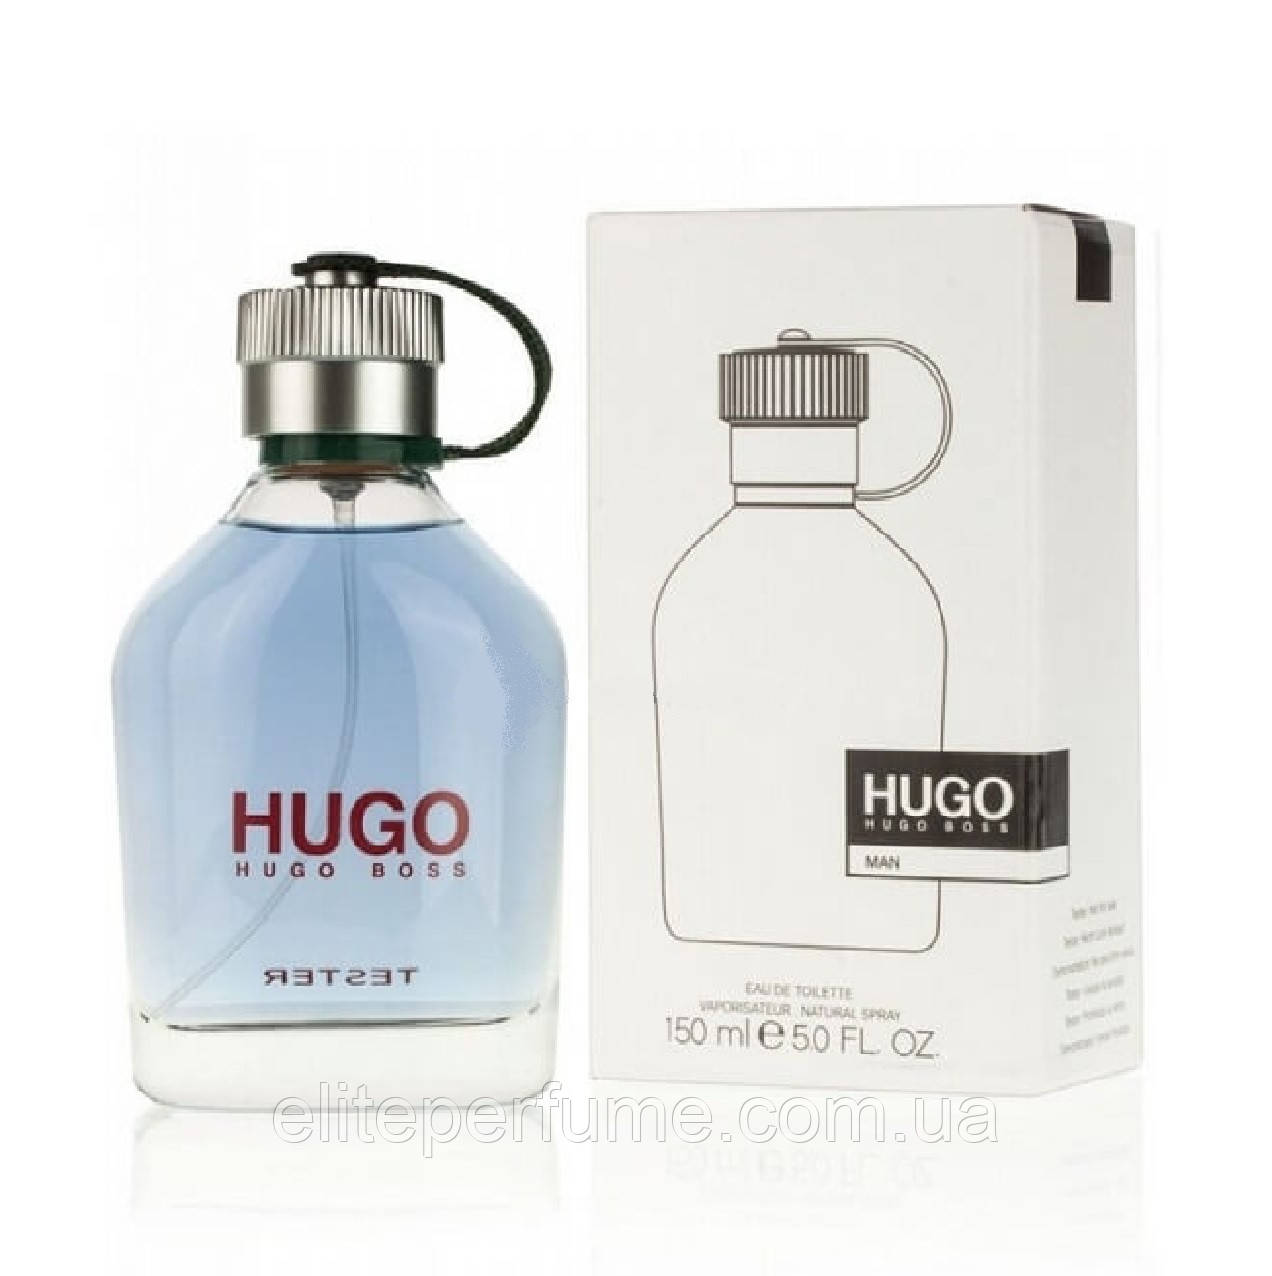 Hugo аналоги. Hugo Boss Hugo men 100 мл. Hugo Boss Hugo man 150 мл. Тестер мужской Hugo Boss Hugo man 150 ml. Hugo Boss Hugo 100мл.